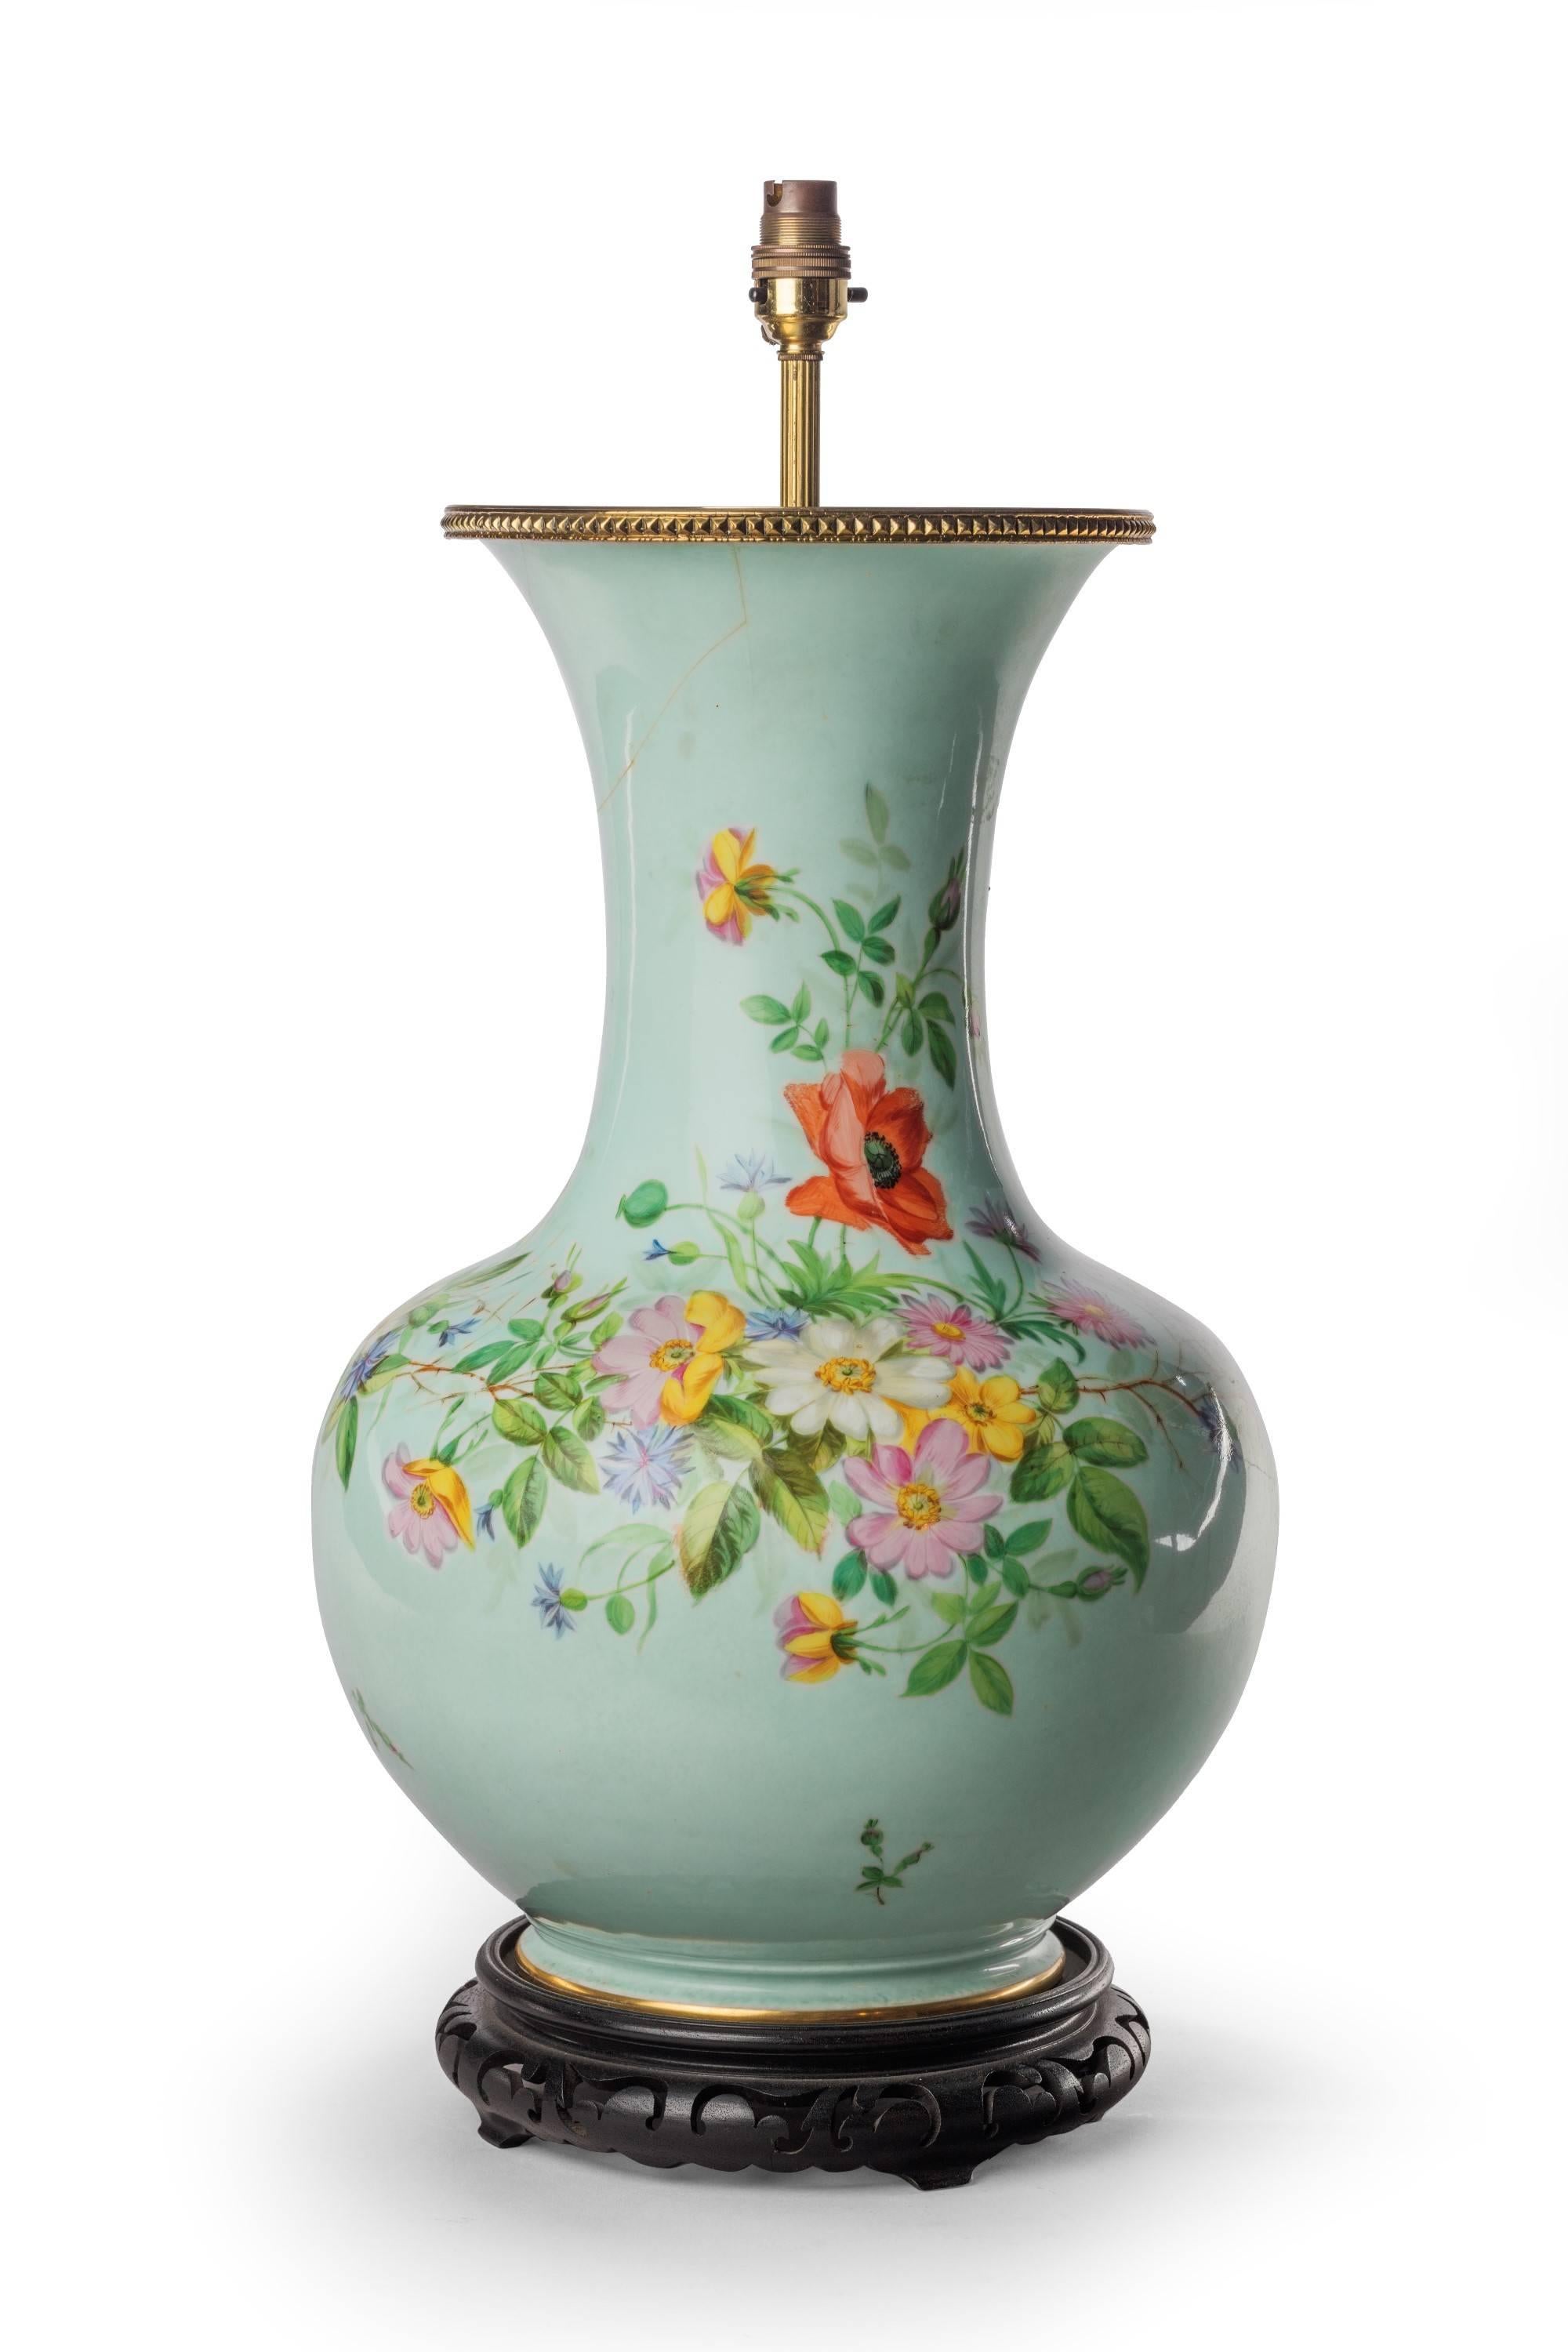 19th century vase